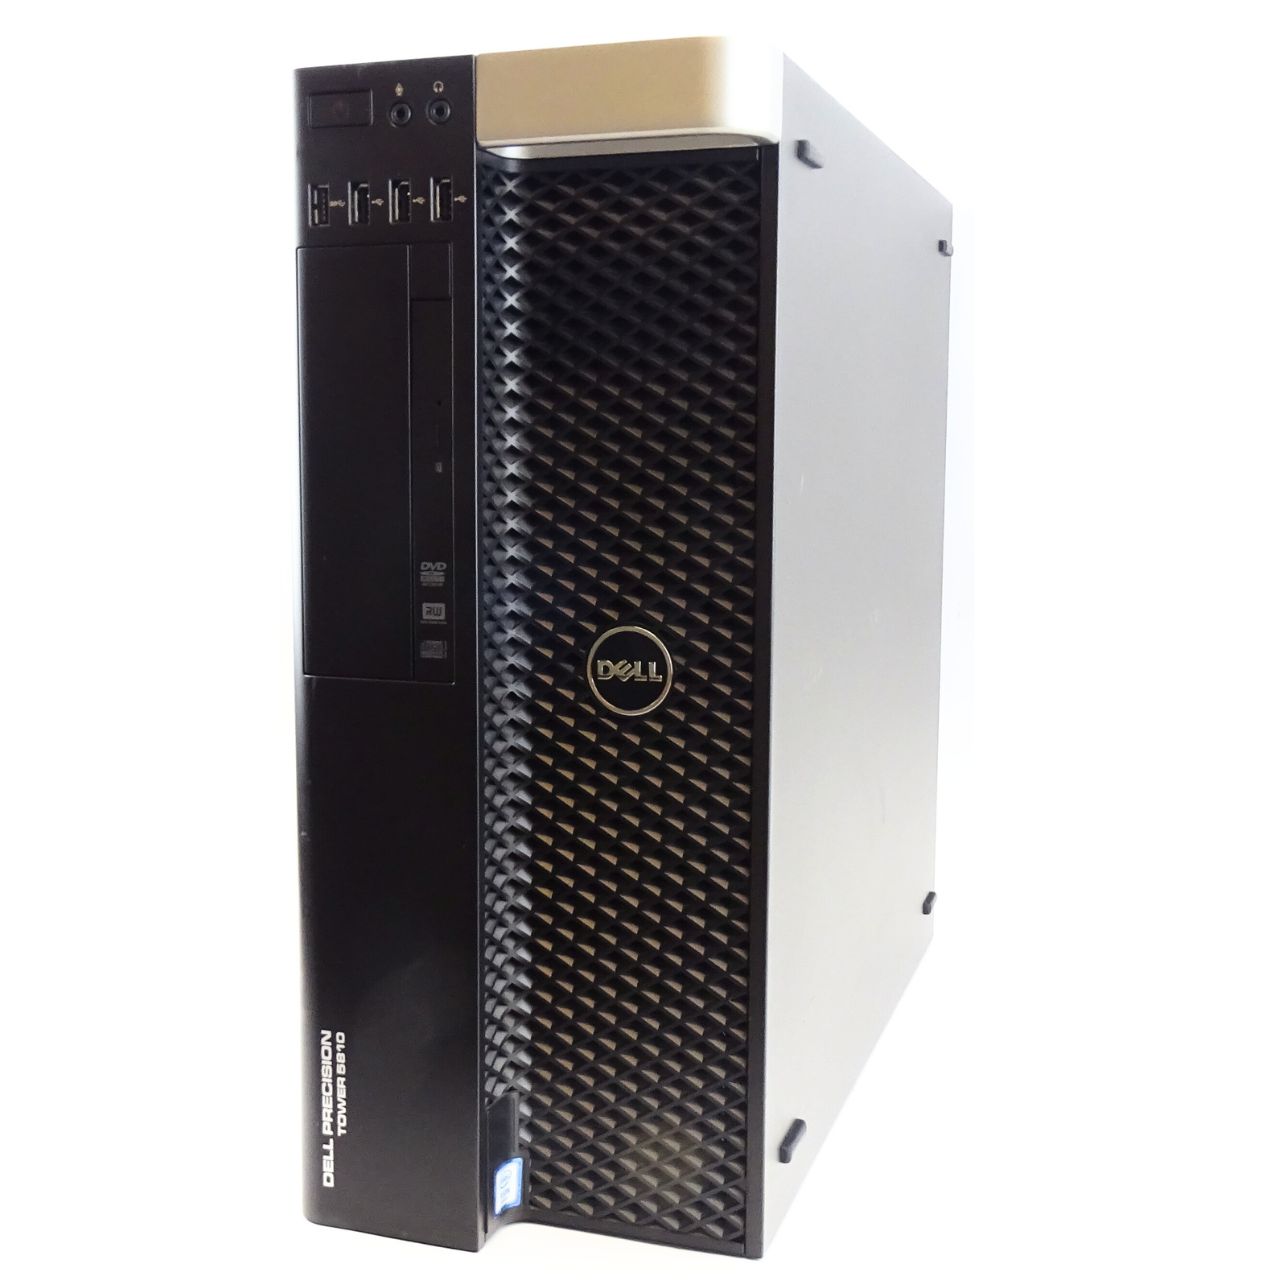 Dell Precision T5810 - Tower - Intel Xeon 1620 v3 @ 3,5 GHz - 32 GB - 256 GB SSD - DVD-RW - Quadro K4200 - Windows 10 Professional - Sehr gut